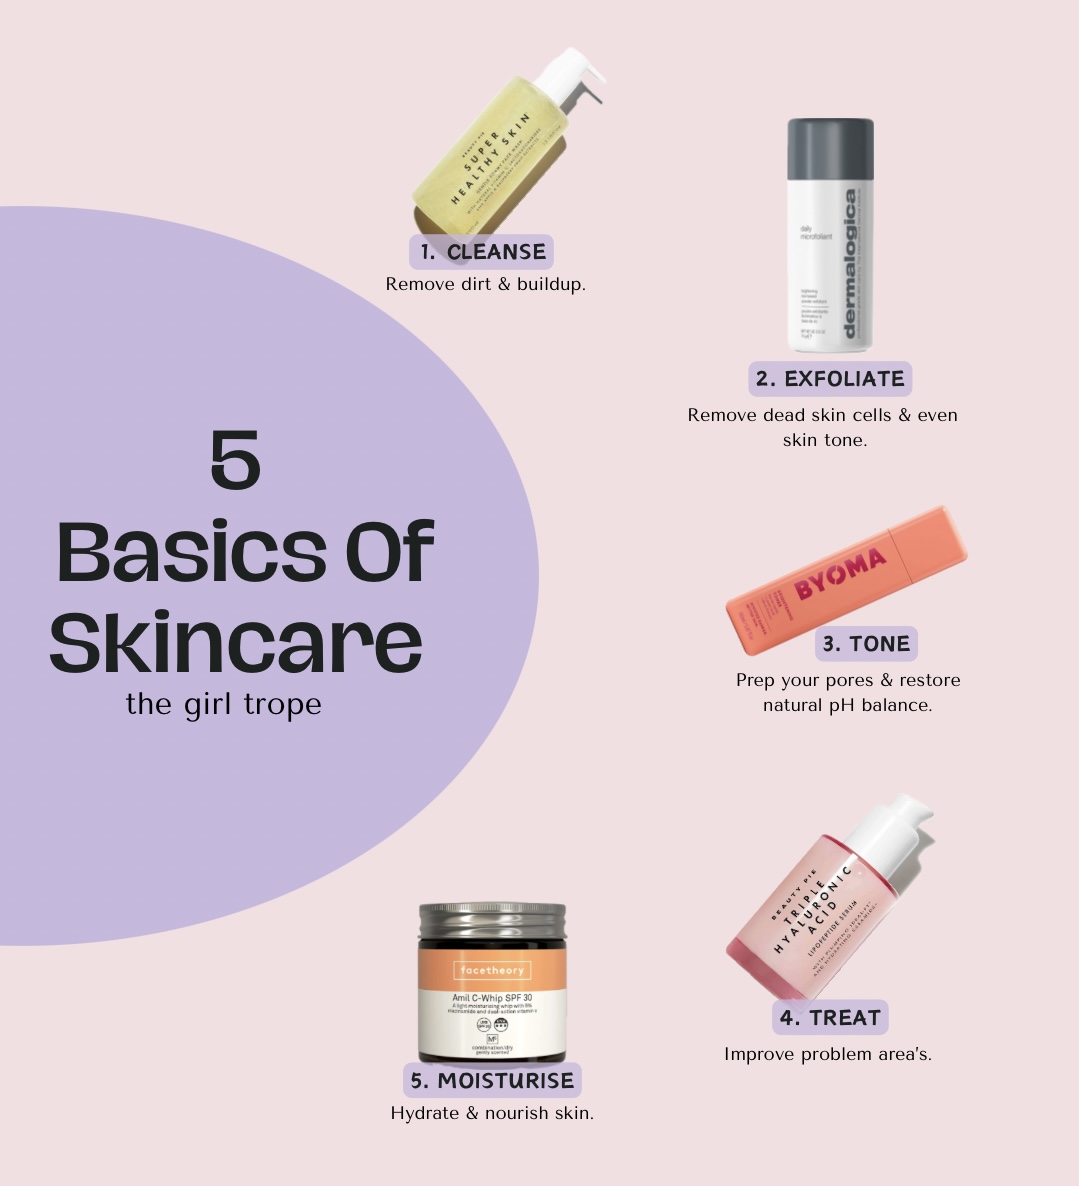 The 5 Basics Of Skincare